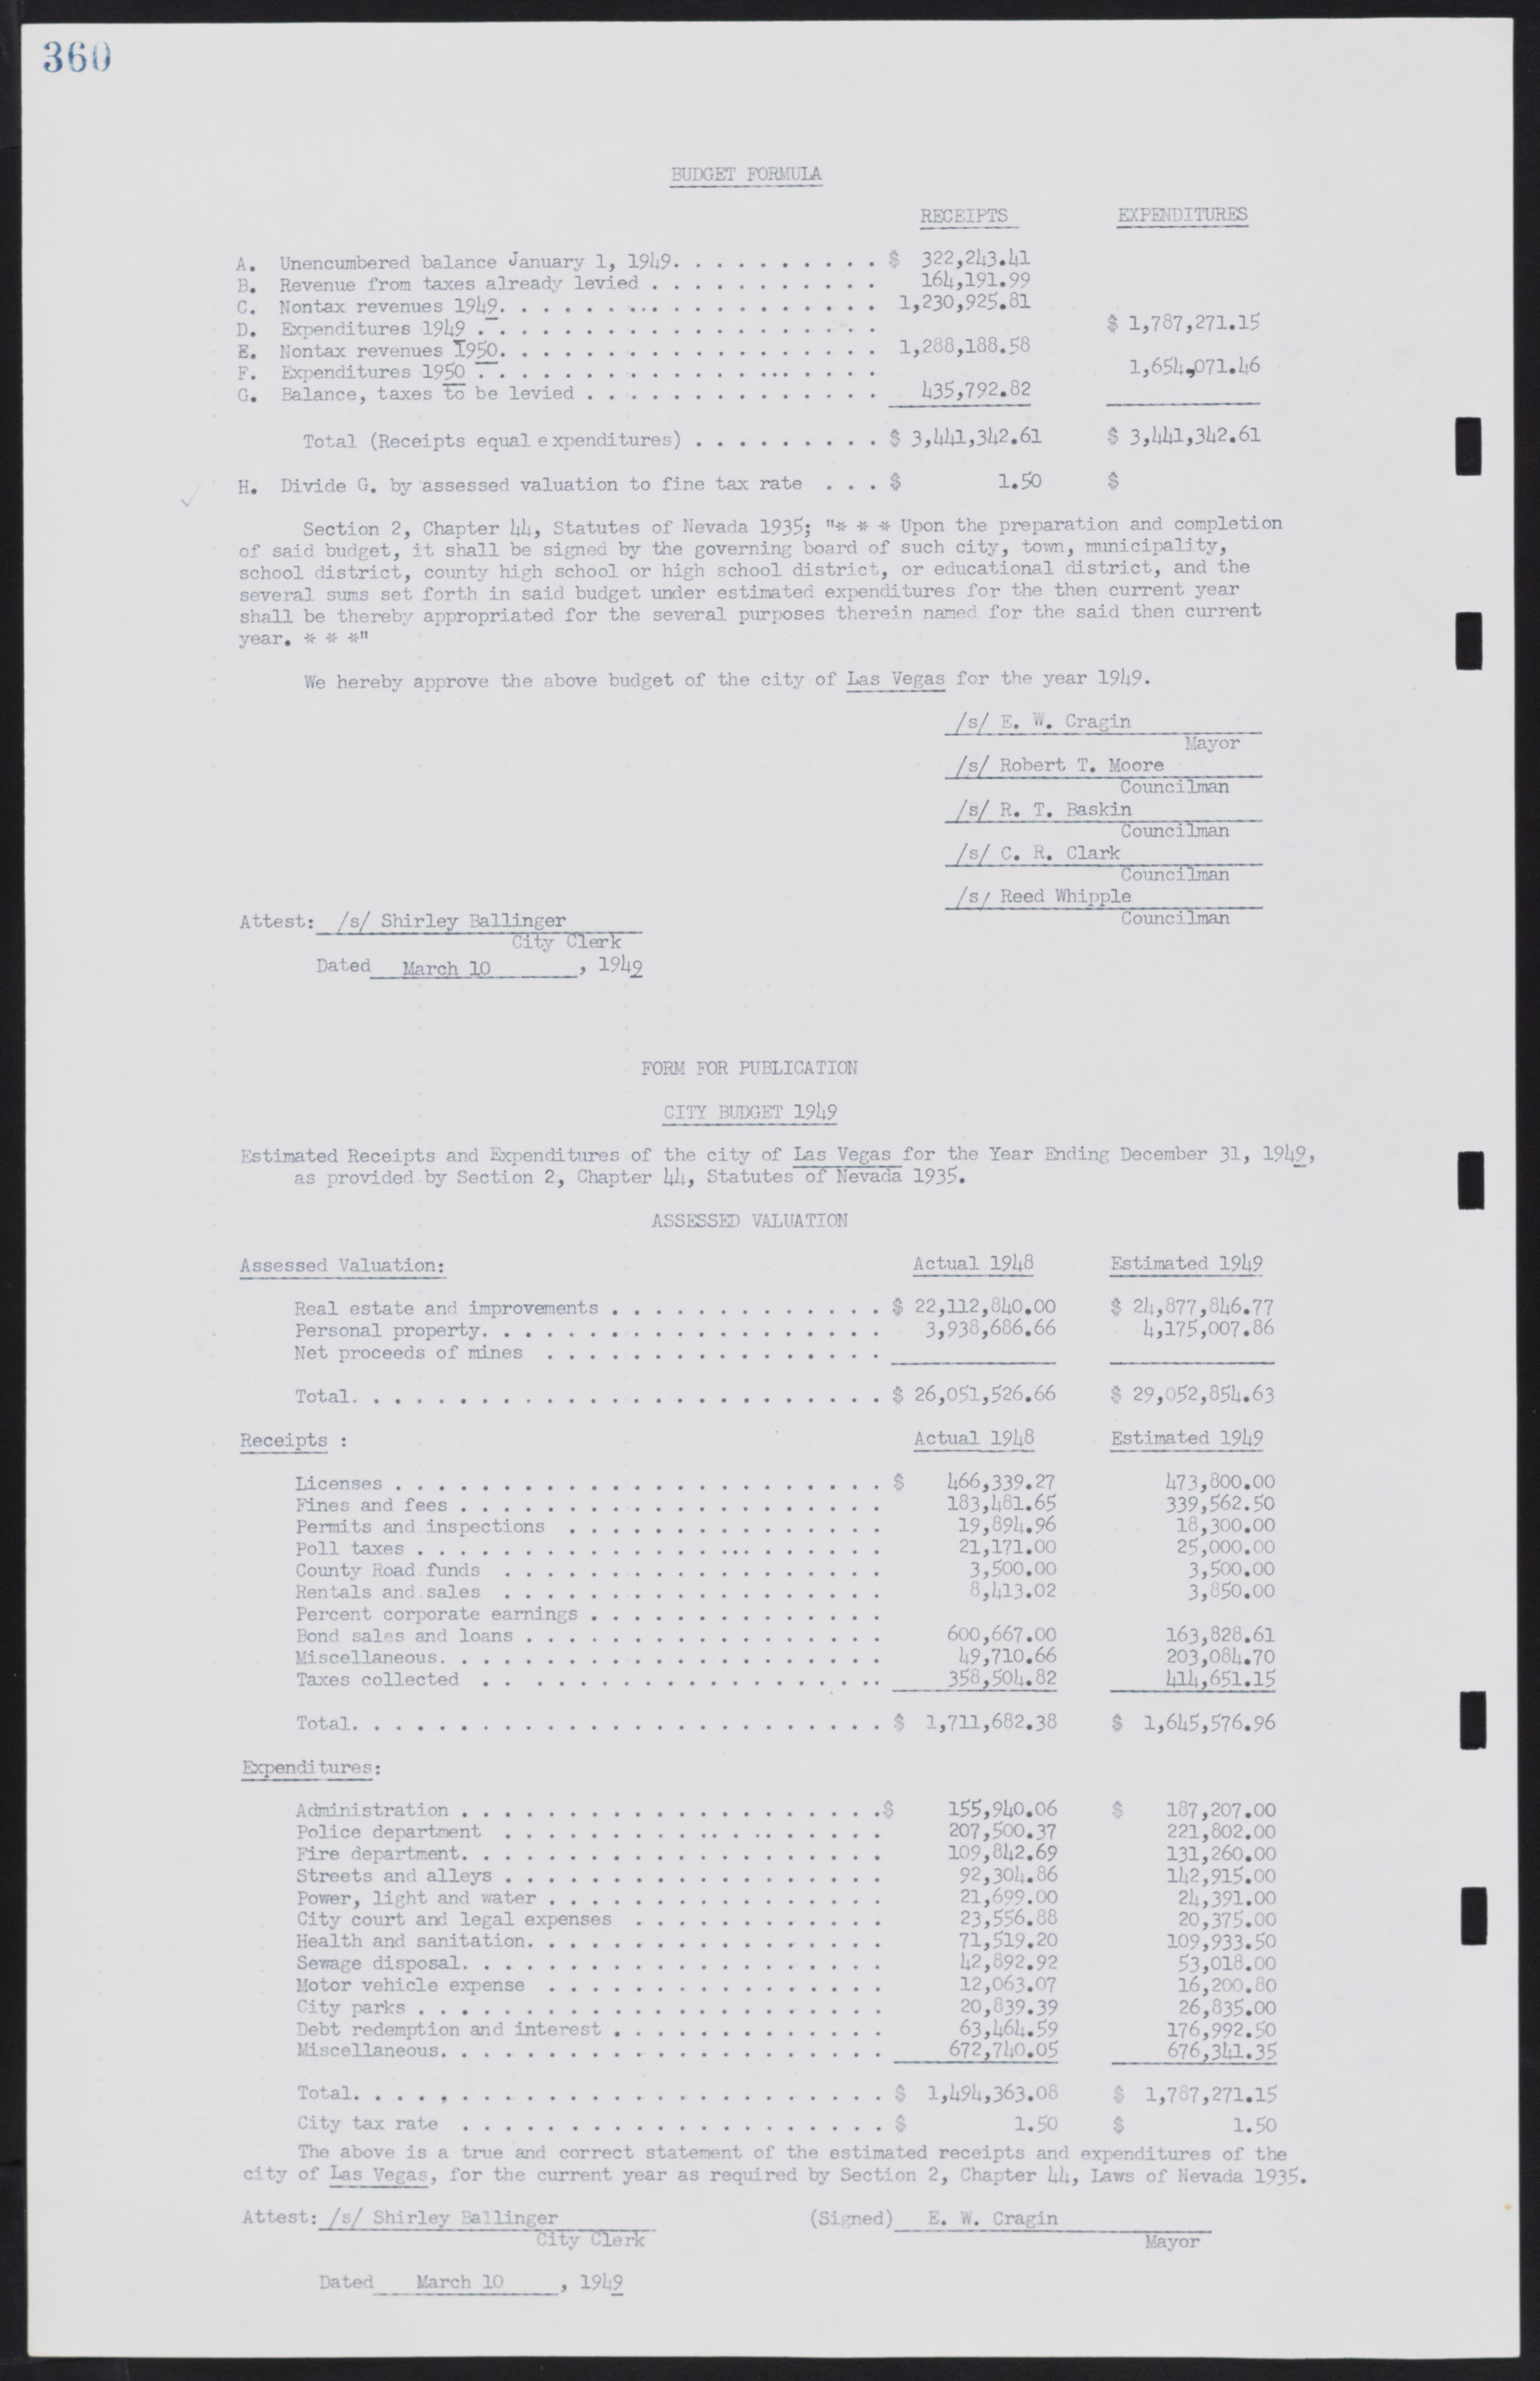 Las Vegas City Commission Minutes, January 7, 1947 to October 26, 1949, lvc000006-390